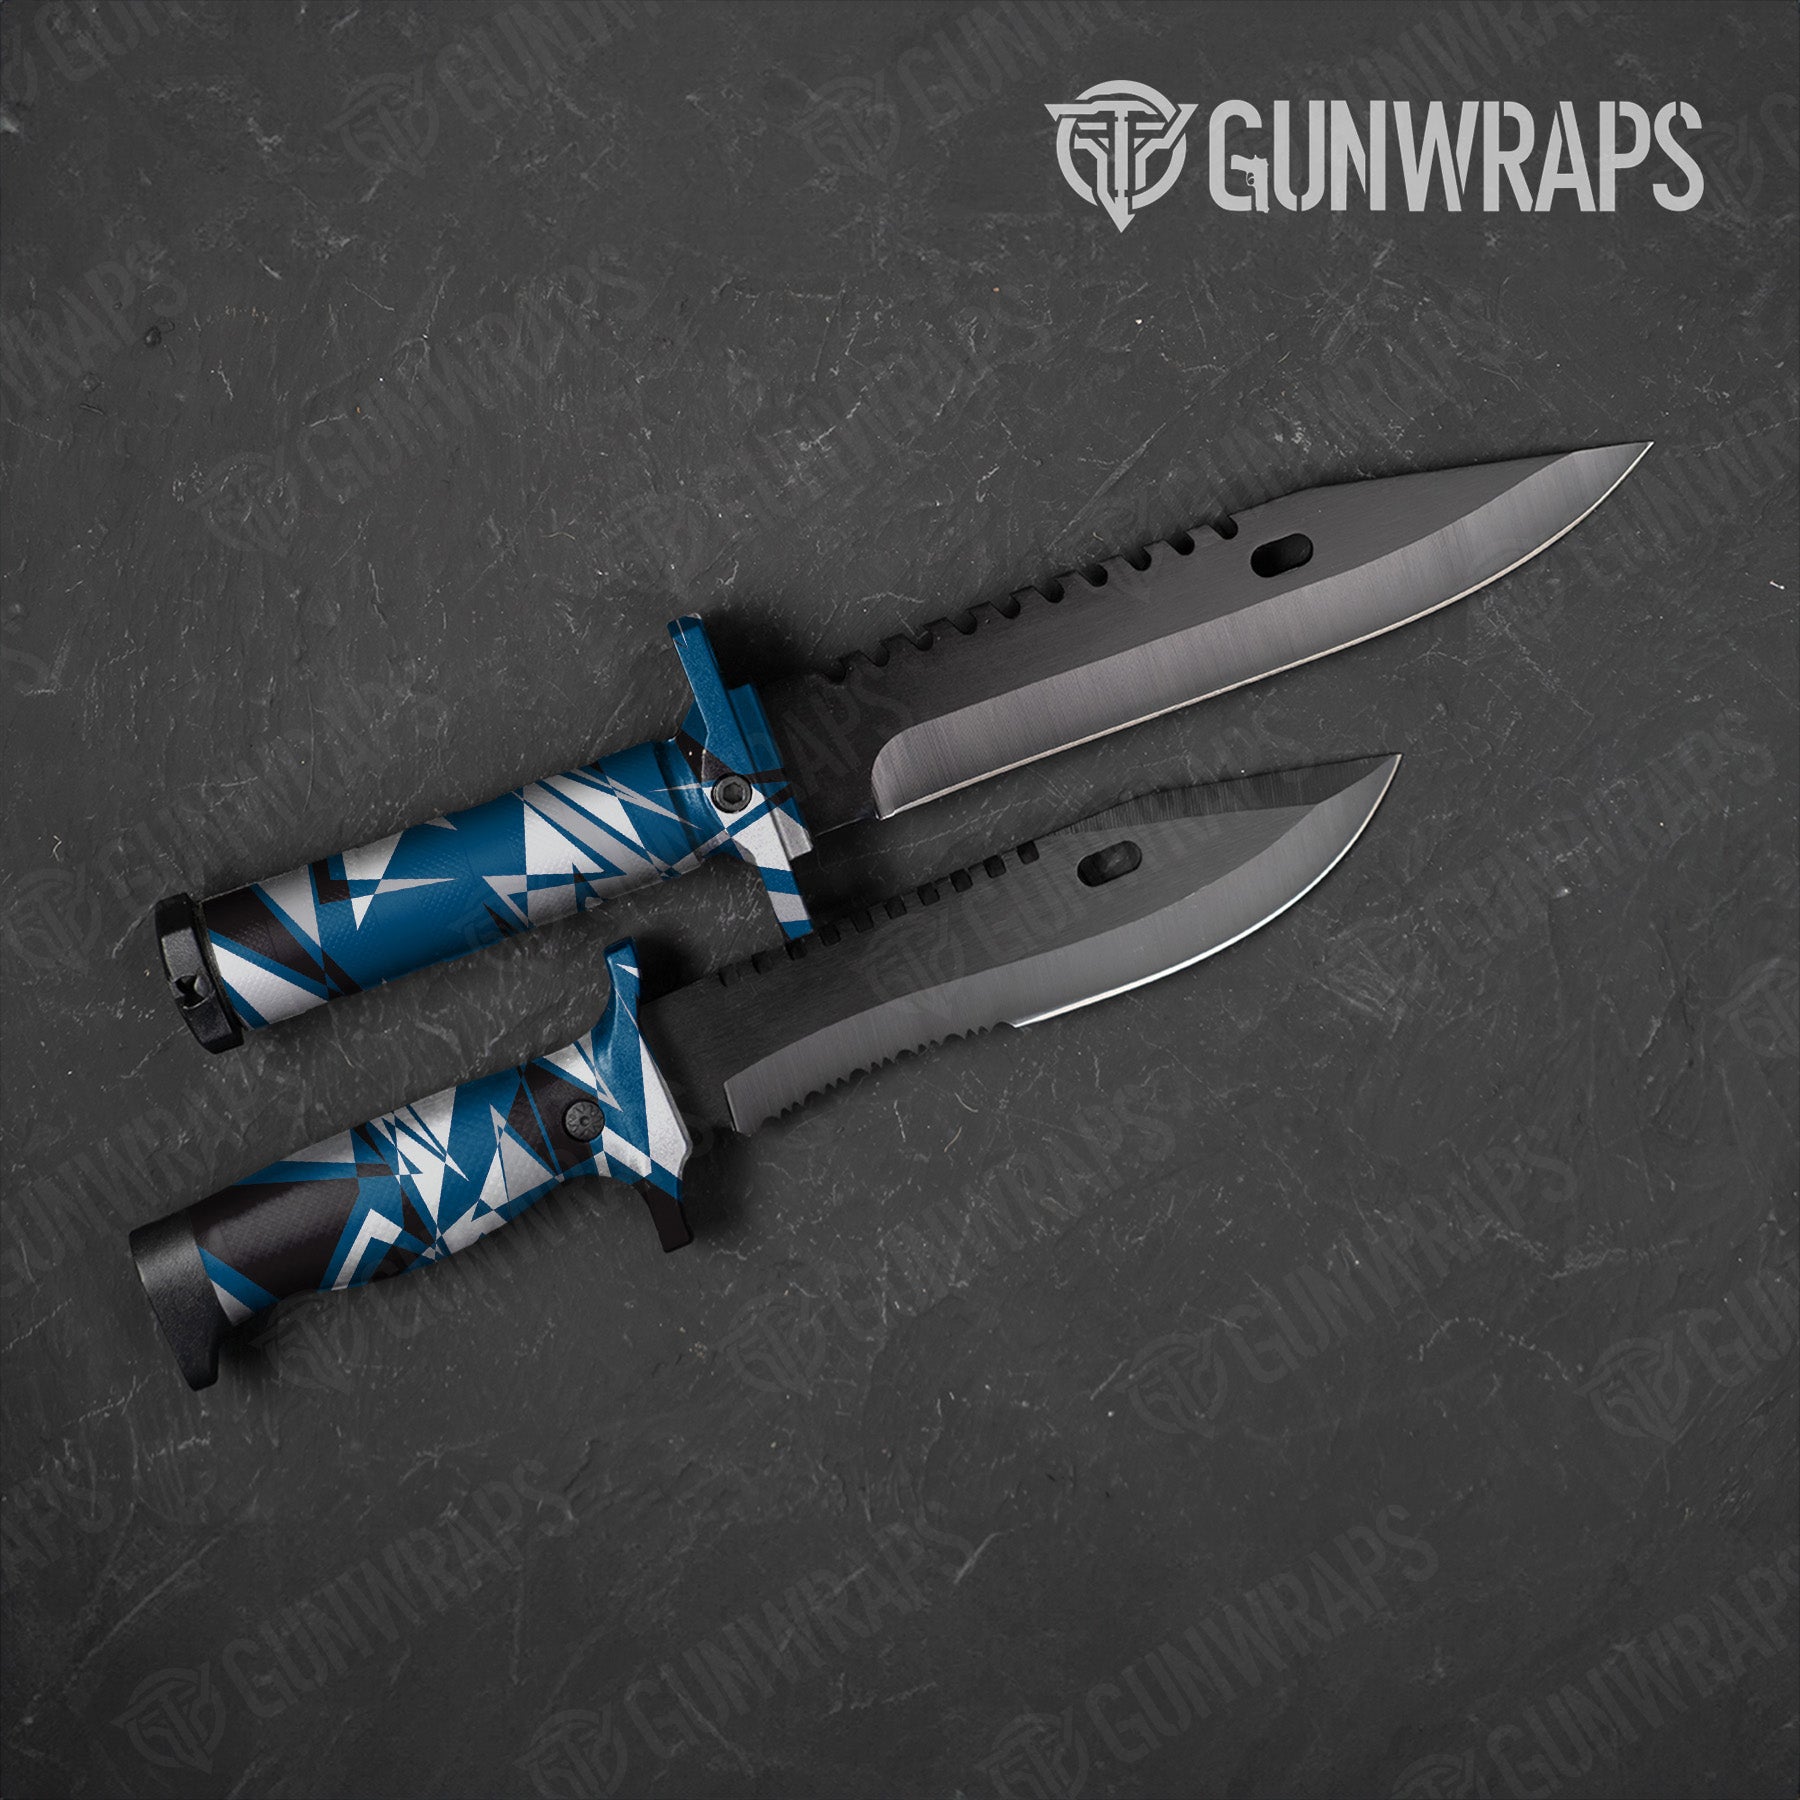 Sharp Blue Tiger Camo Knife Gear Skin Vinyl Wrap